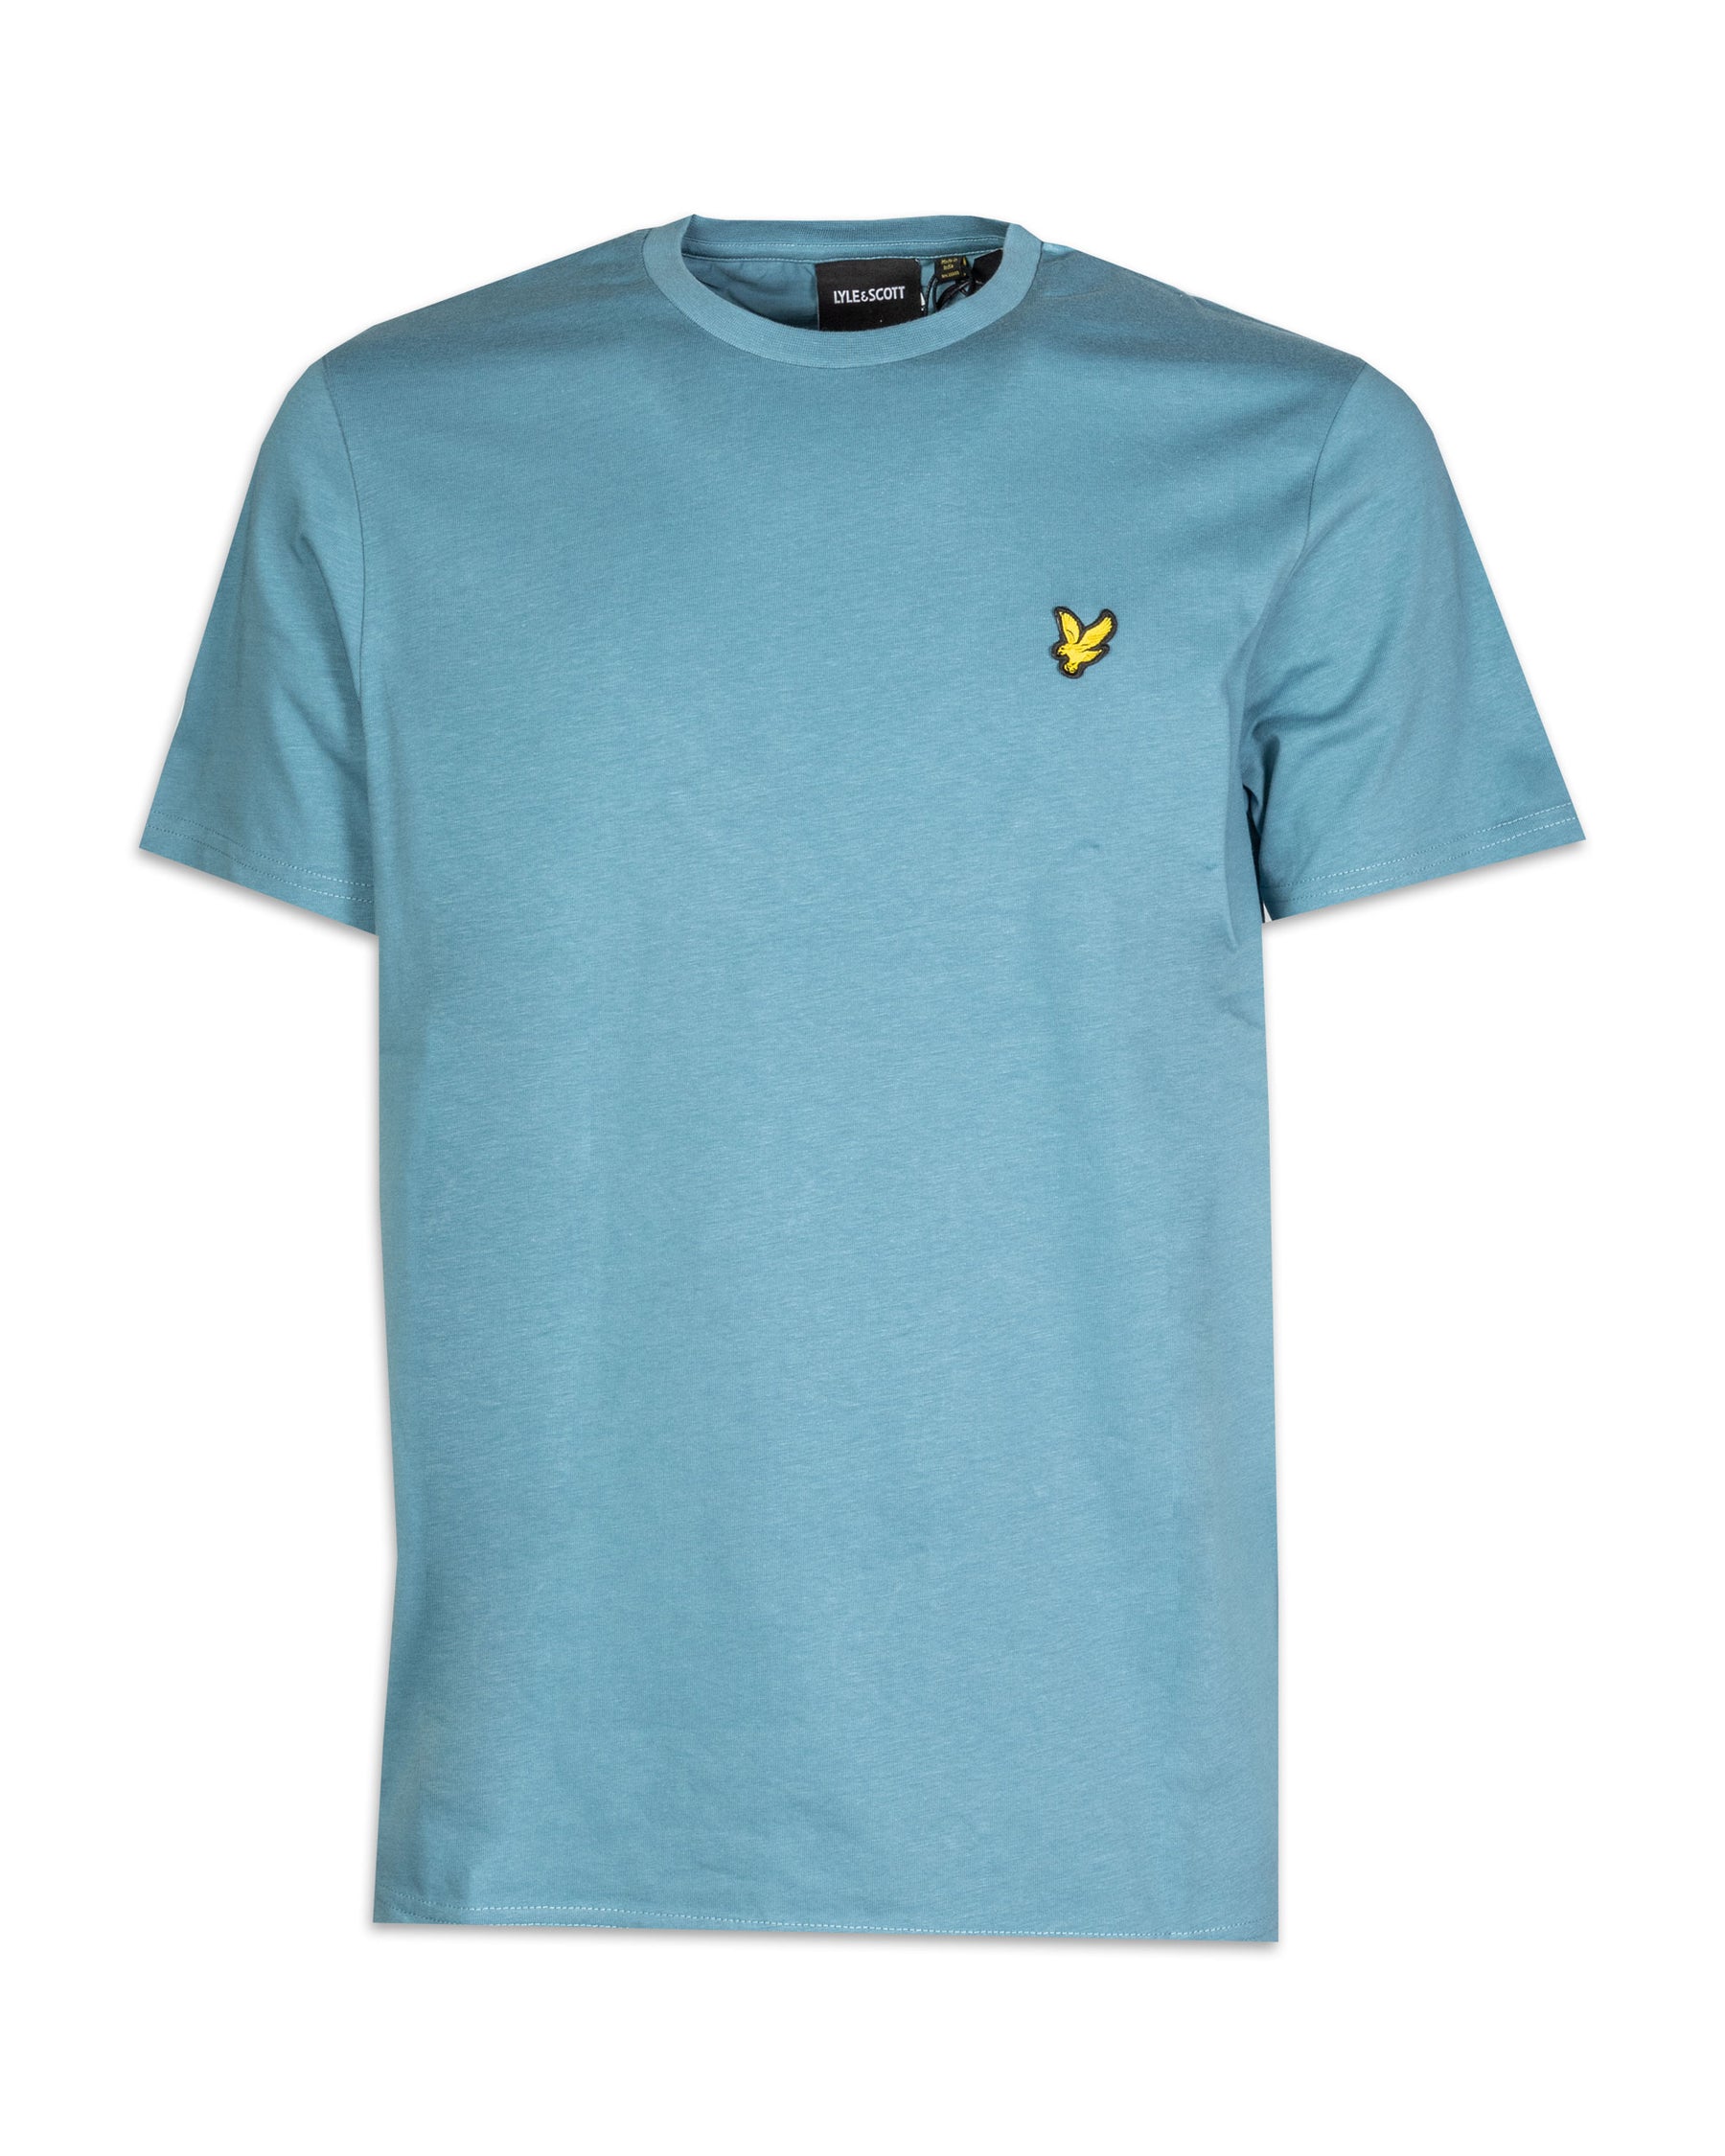 T-Shirt Uomo Lyle And Scott Classic Logo Azzurro